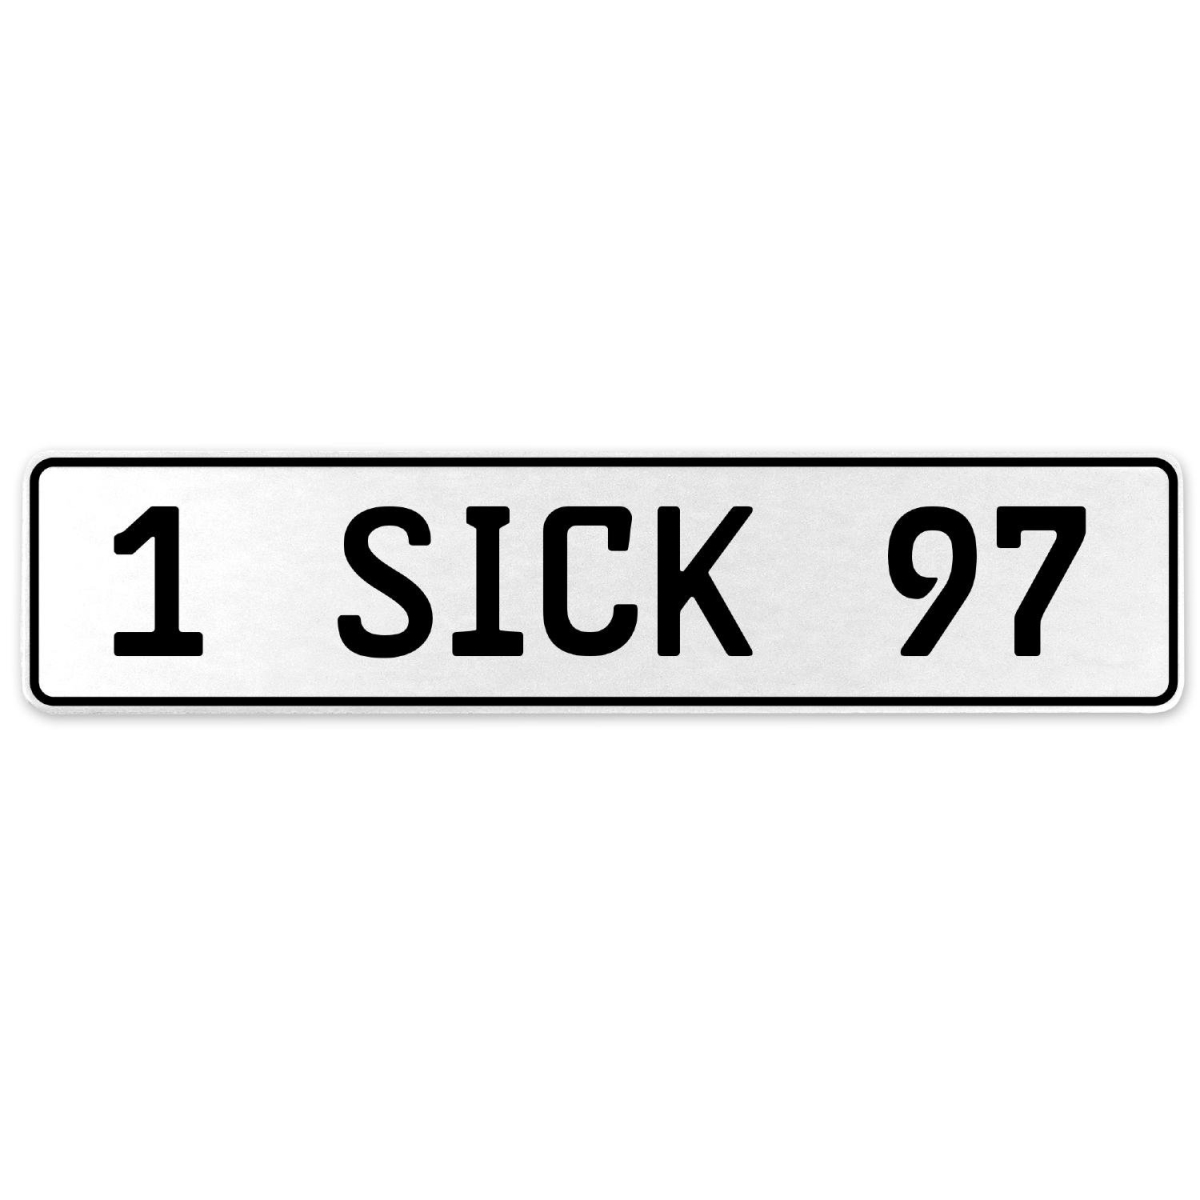 554496 1 Sick 97 - White Aluminum Street Sign Mancave Euro Plate Name Door Sign Wall